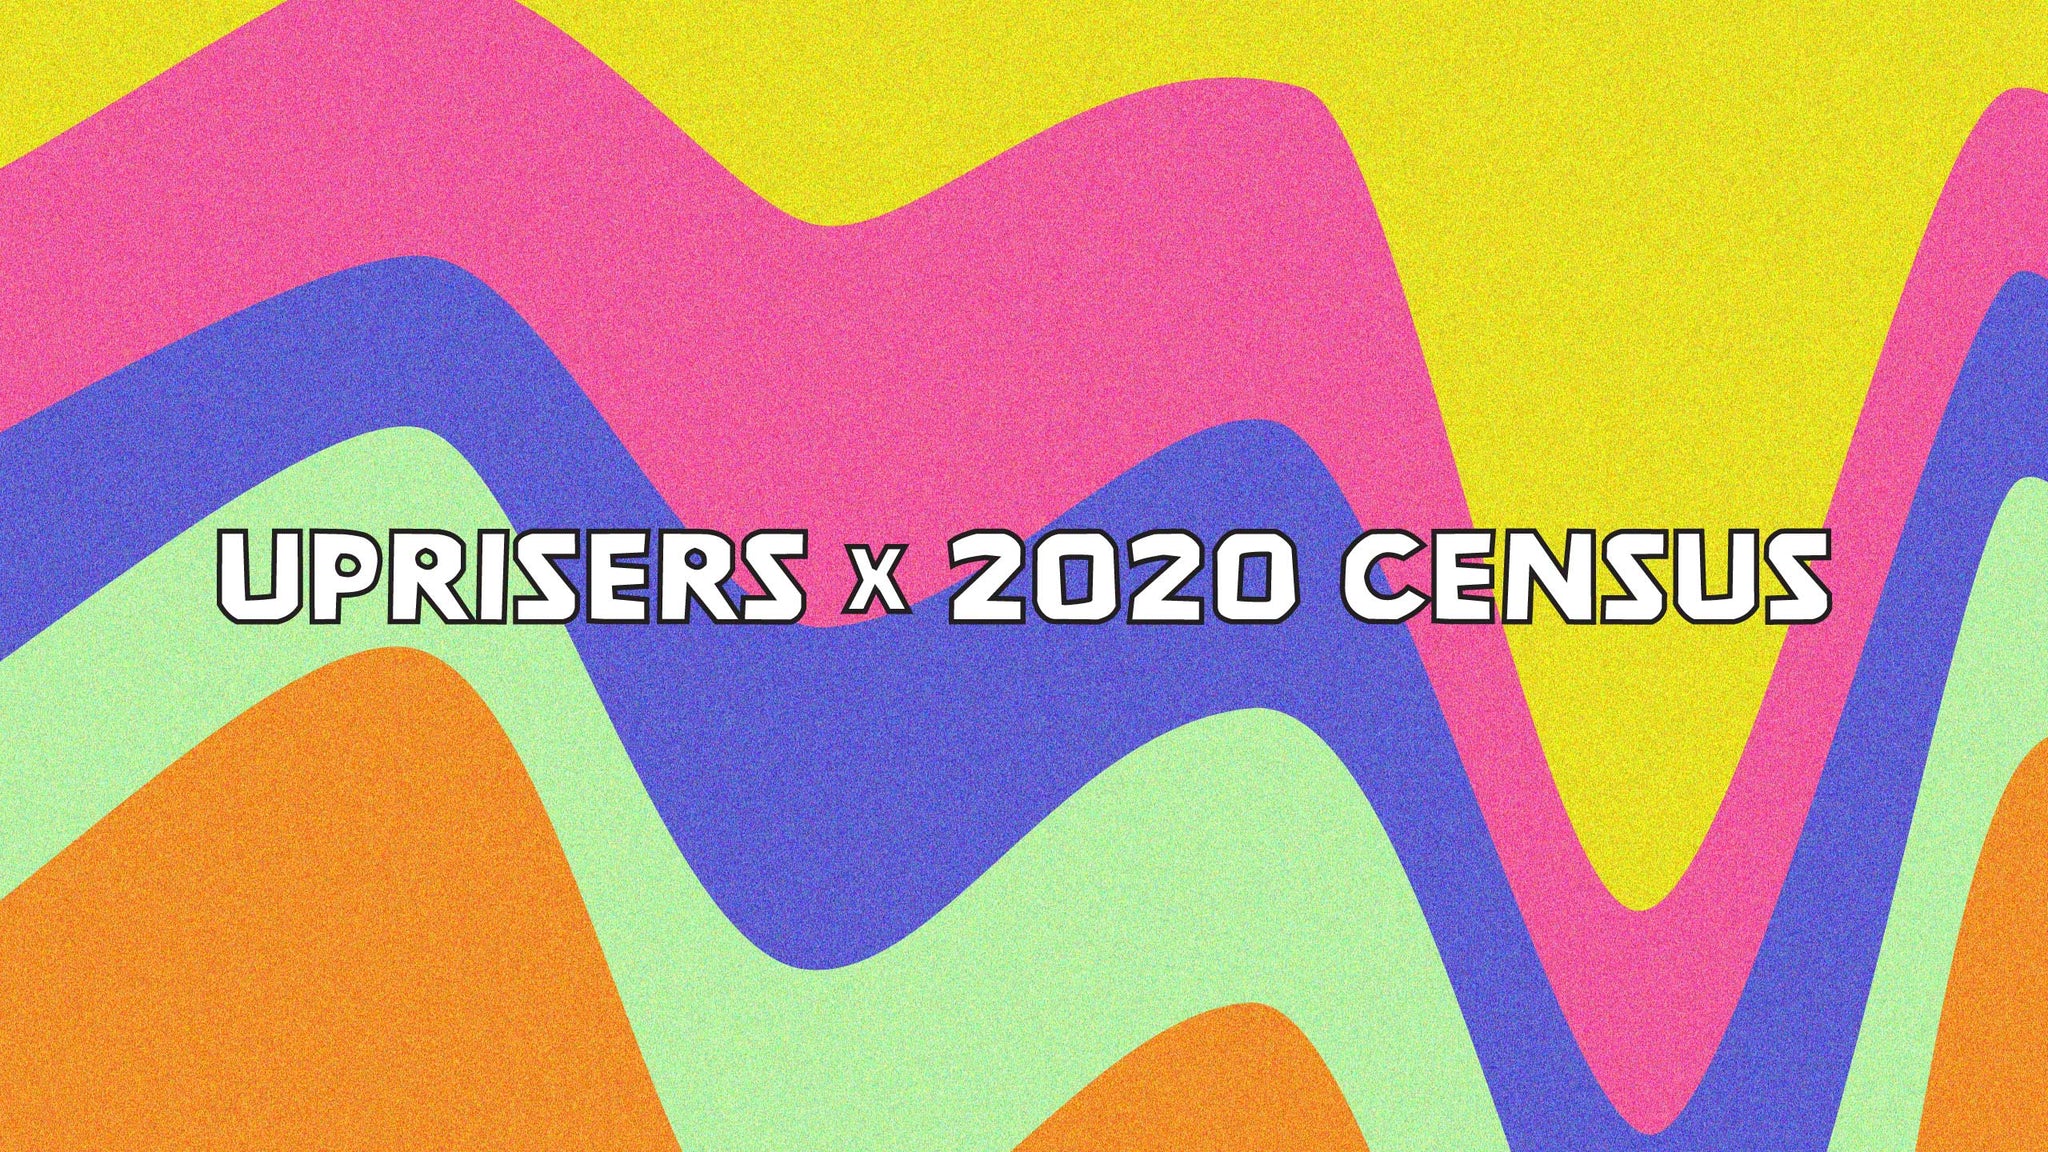 #2020Census x UPRISERS